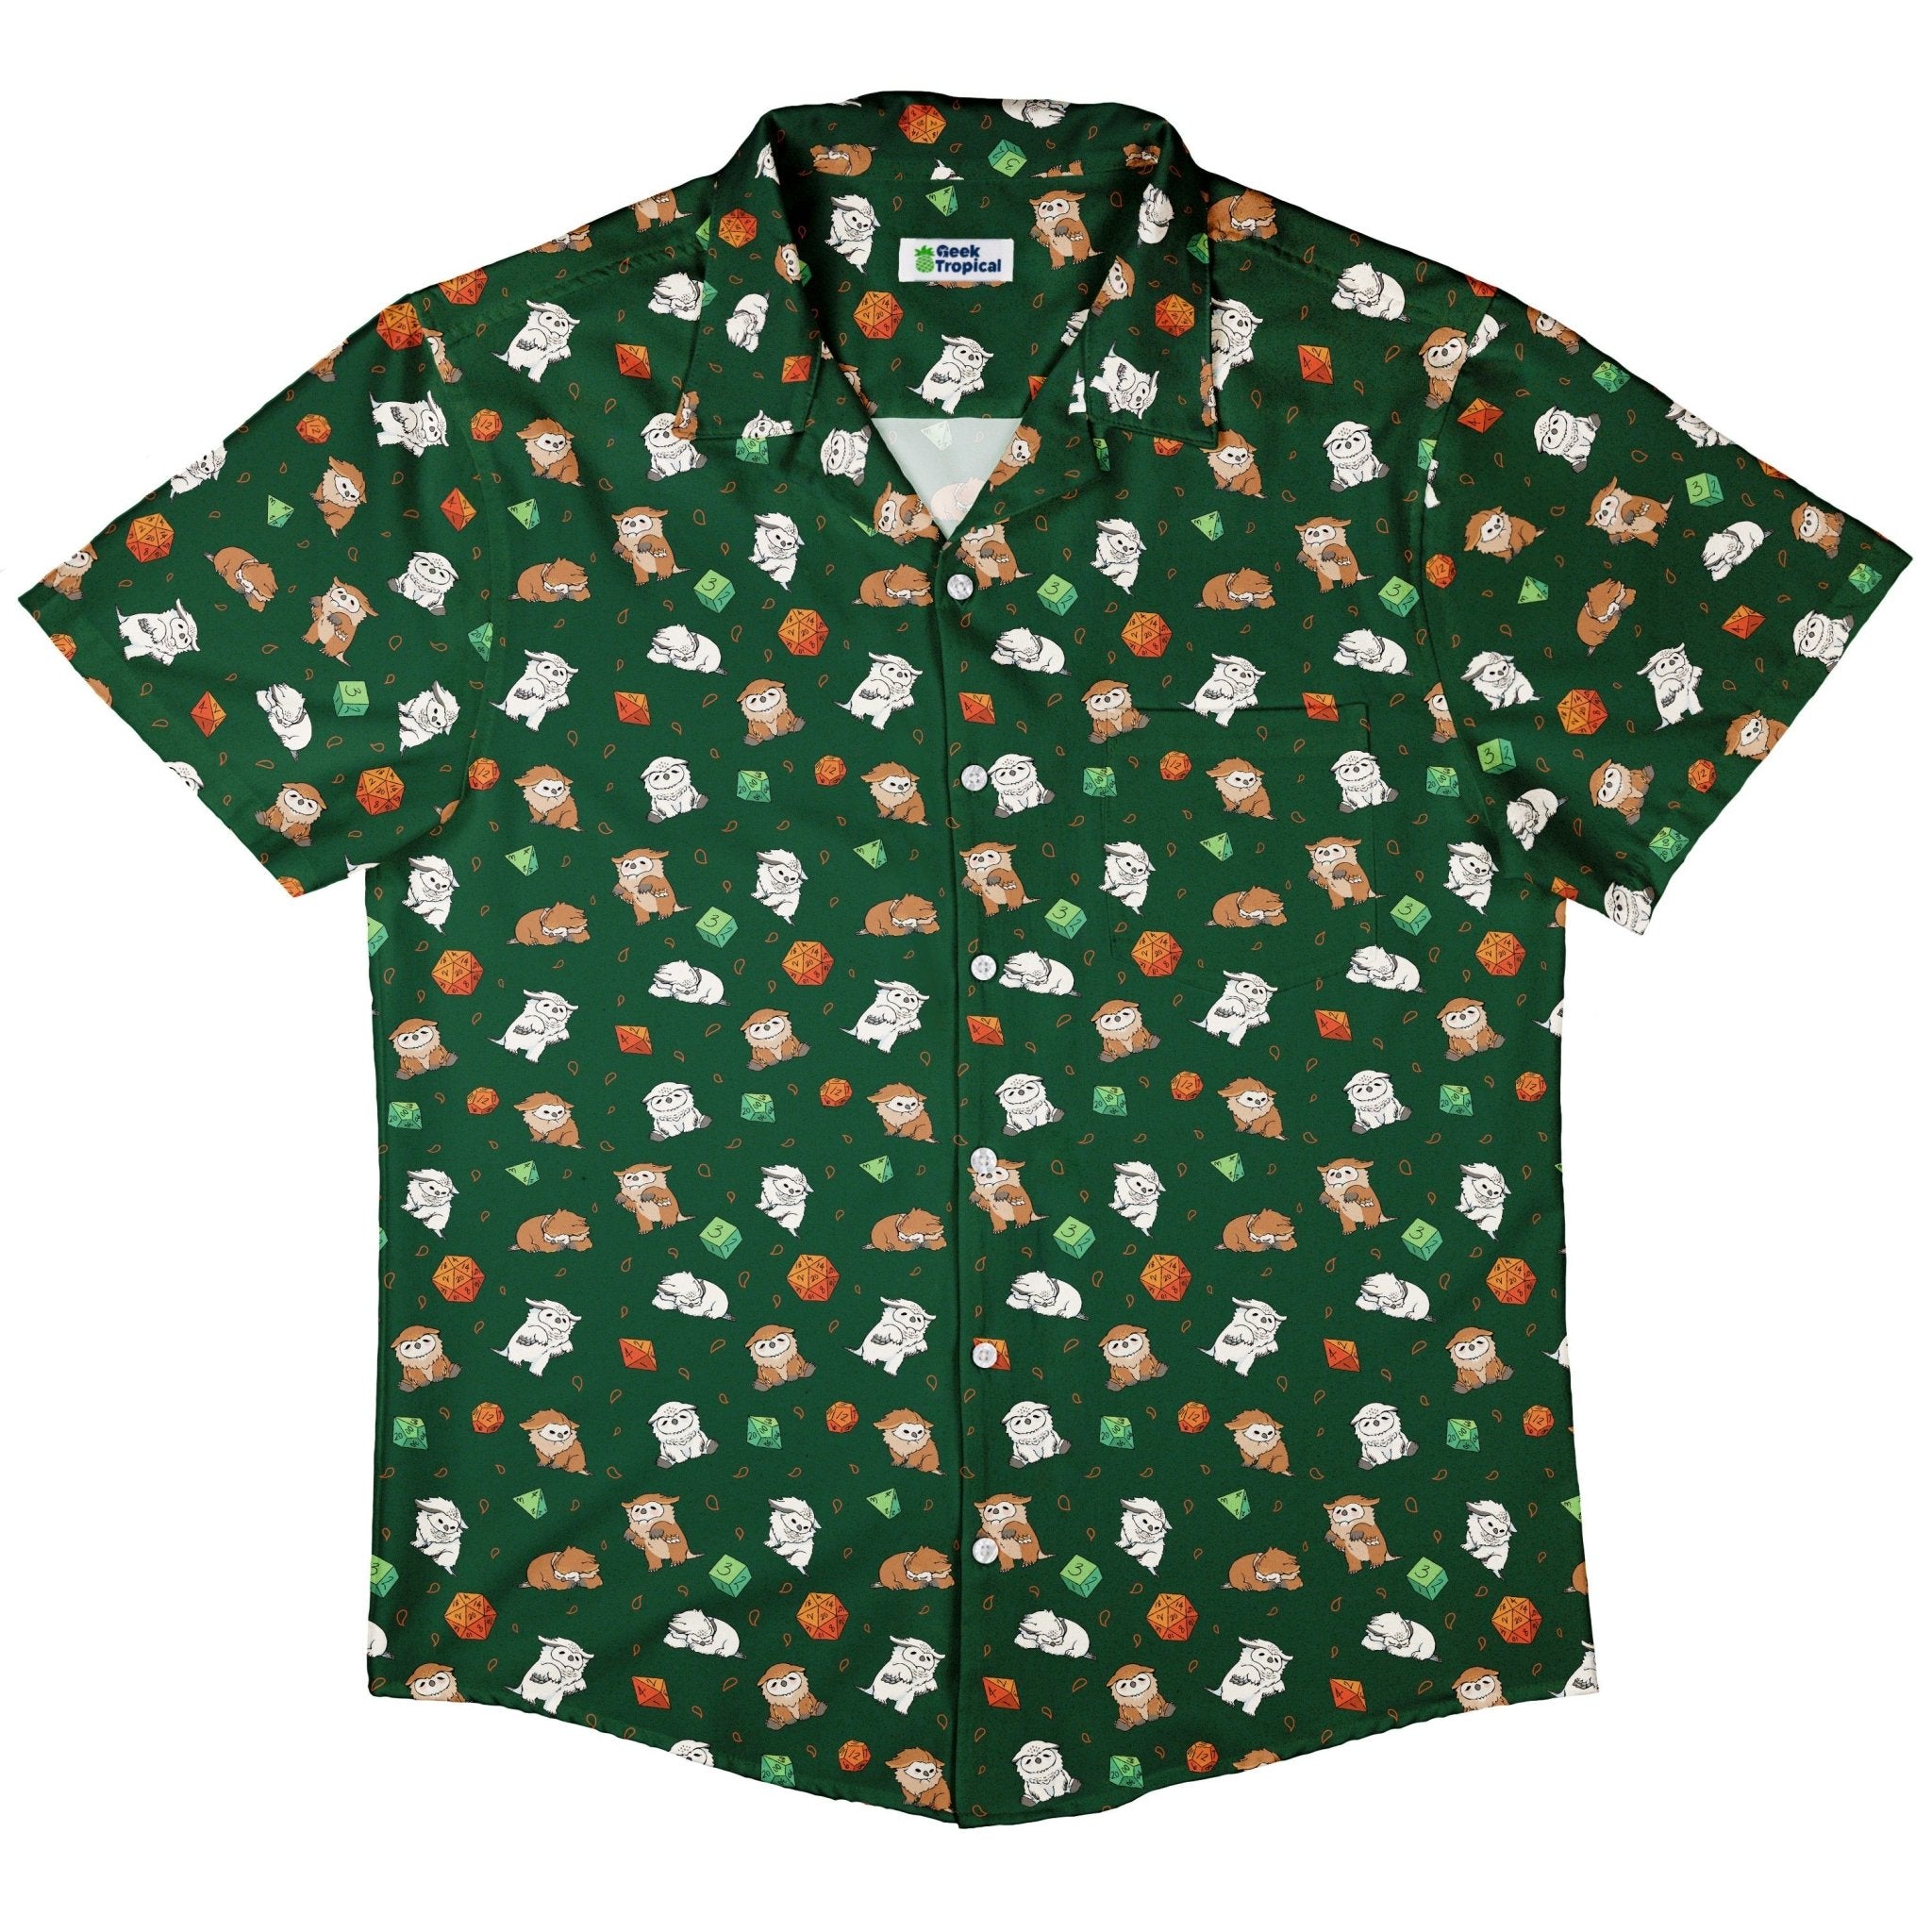 Dnd Owlbears Button Up Shirt - adult sizing - Design by Ardi Tong - dnd & rpg print